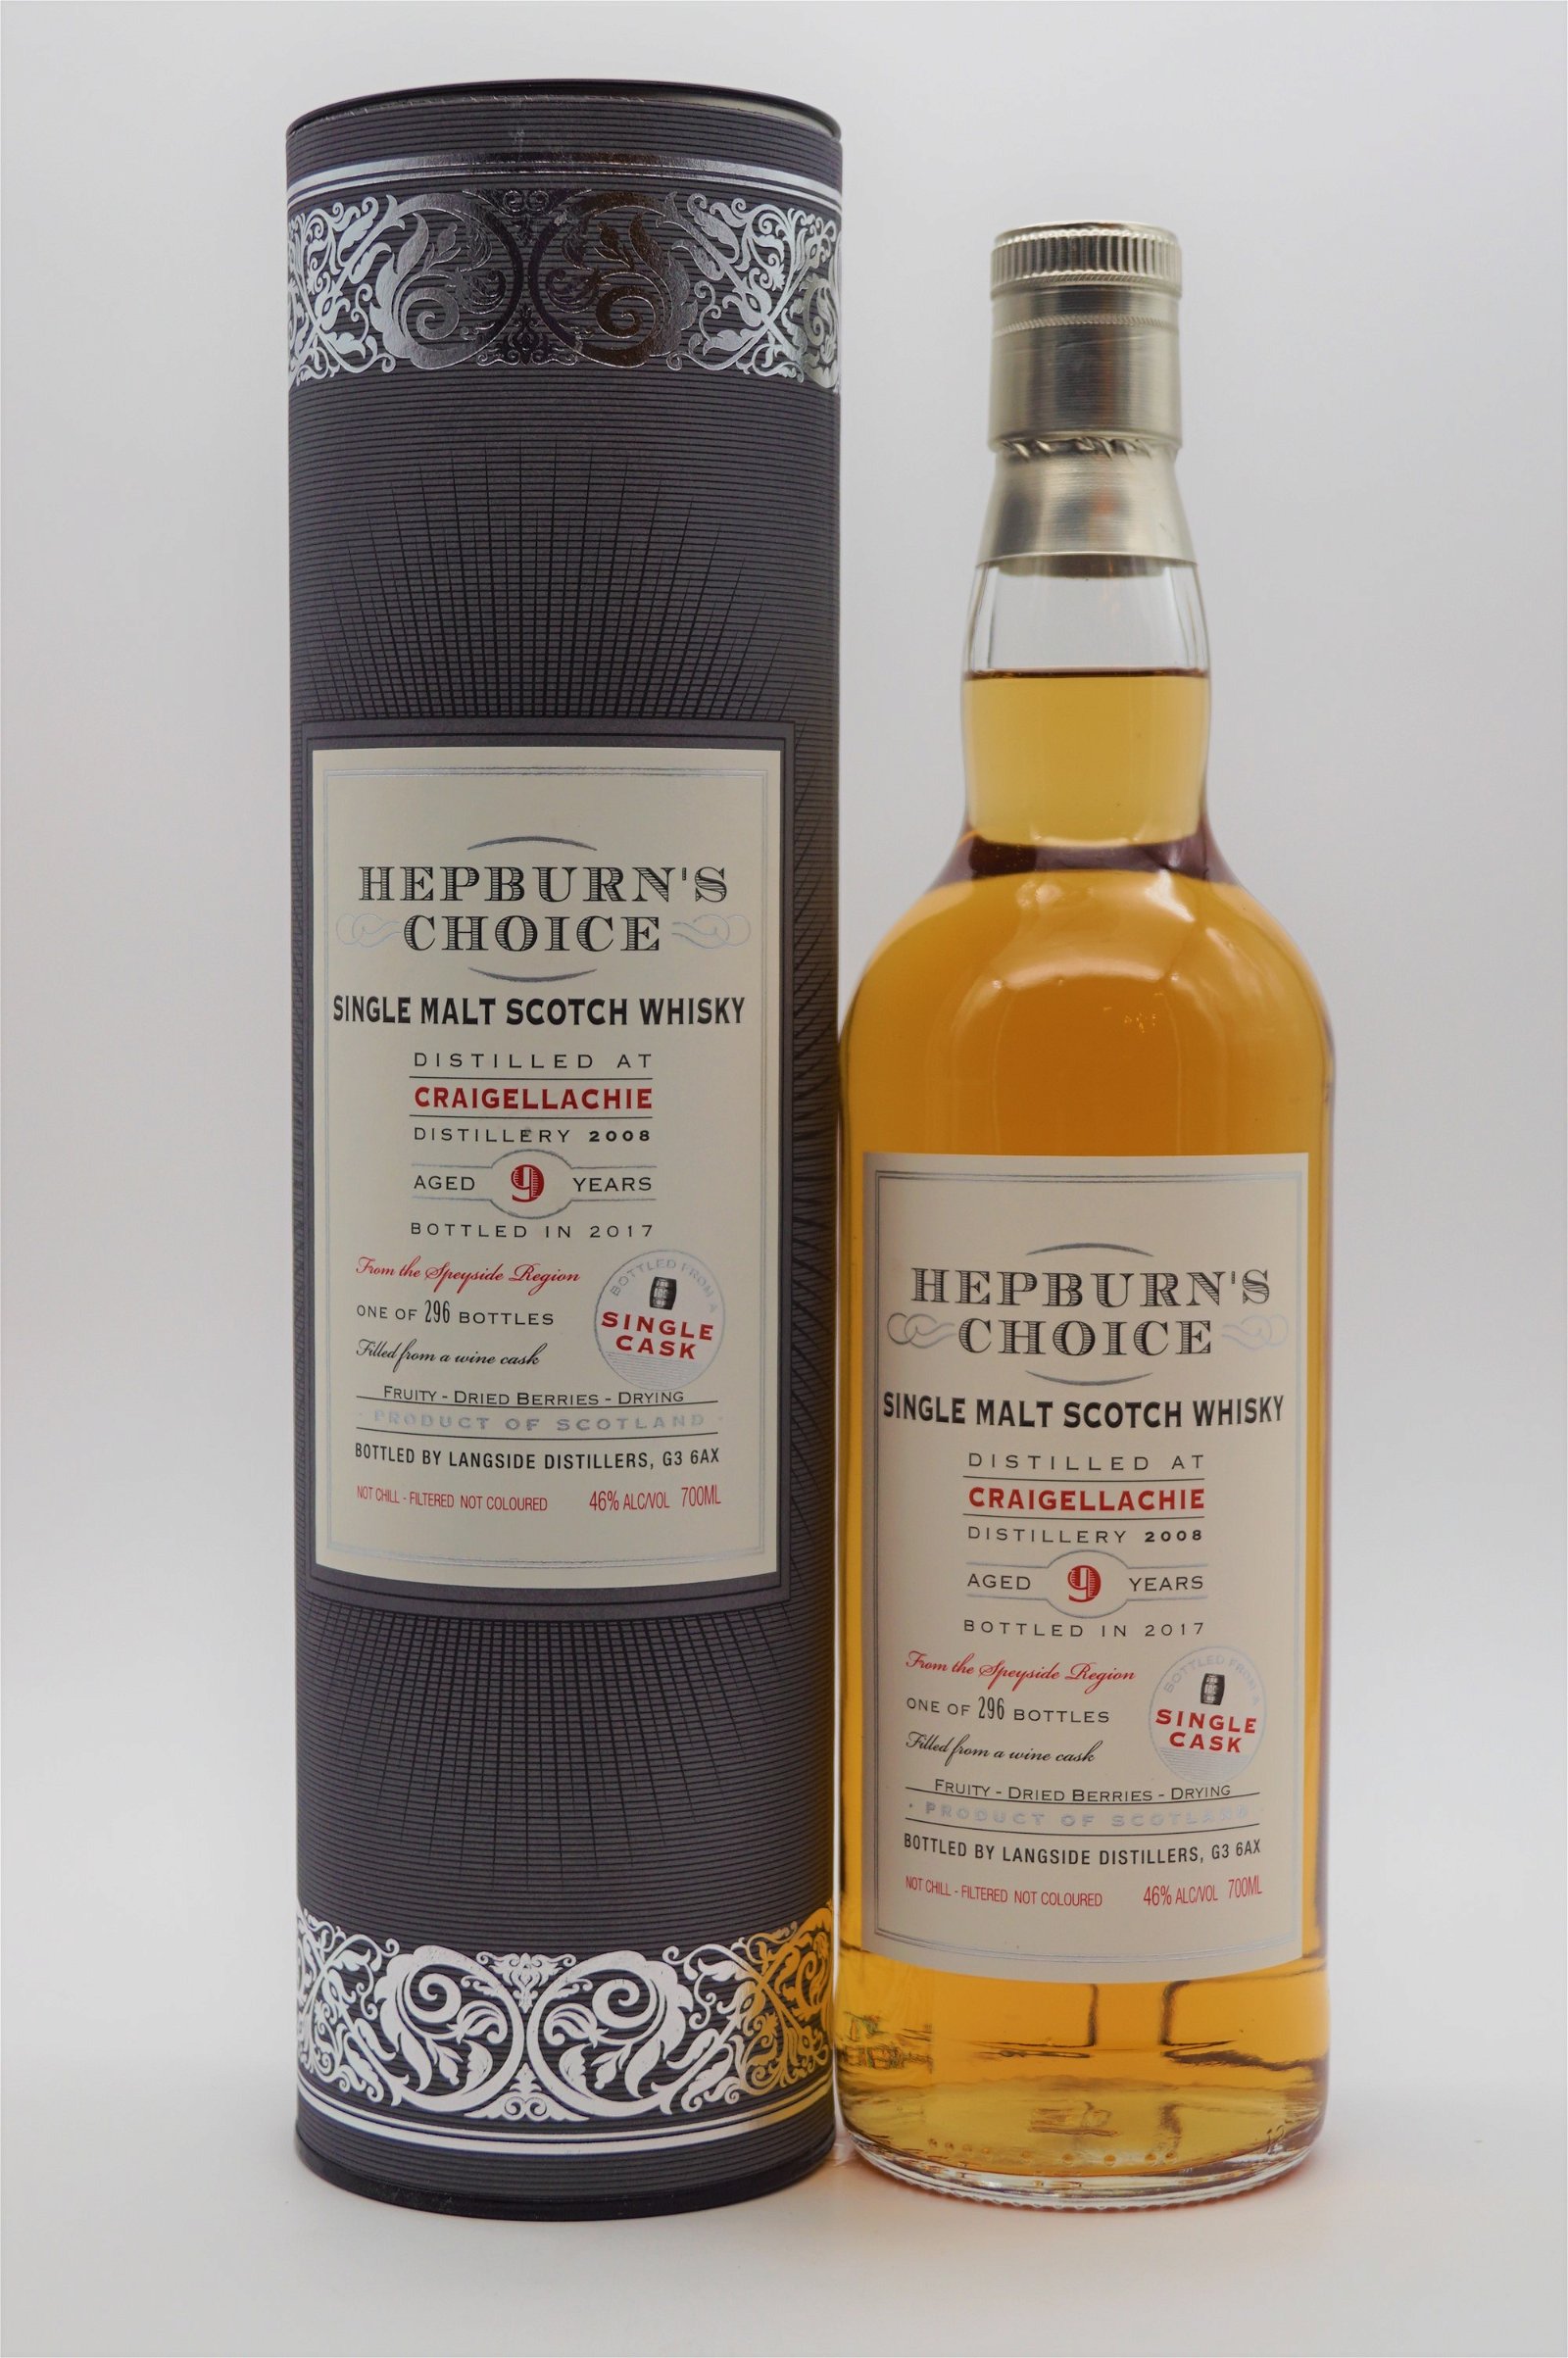 Hepburns Choice Caigellachie 9 Jahre 2008/2017 - 296 Fl. Single Malt Scotch